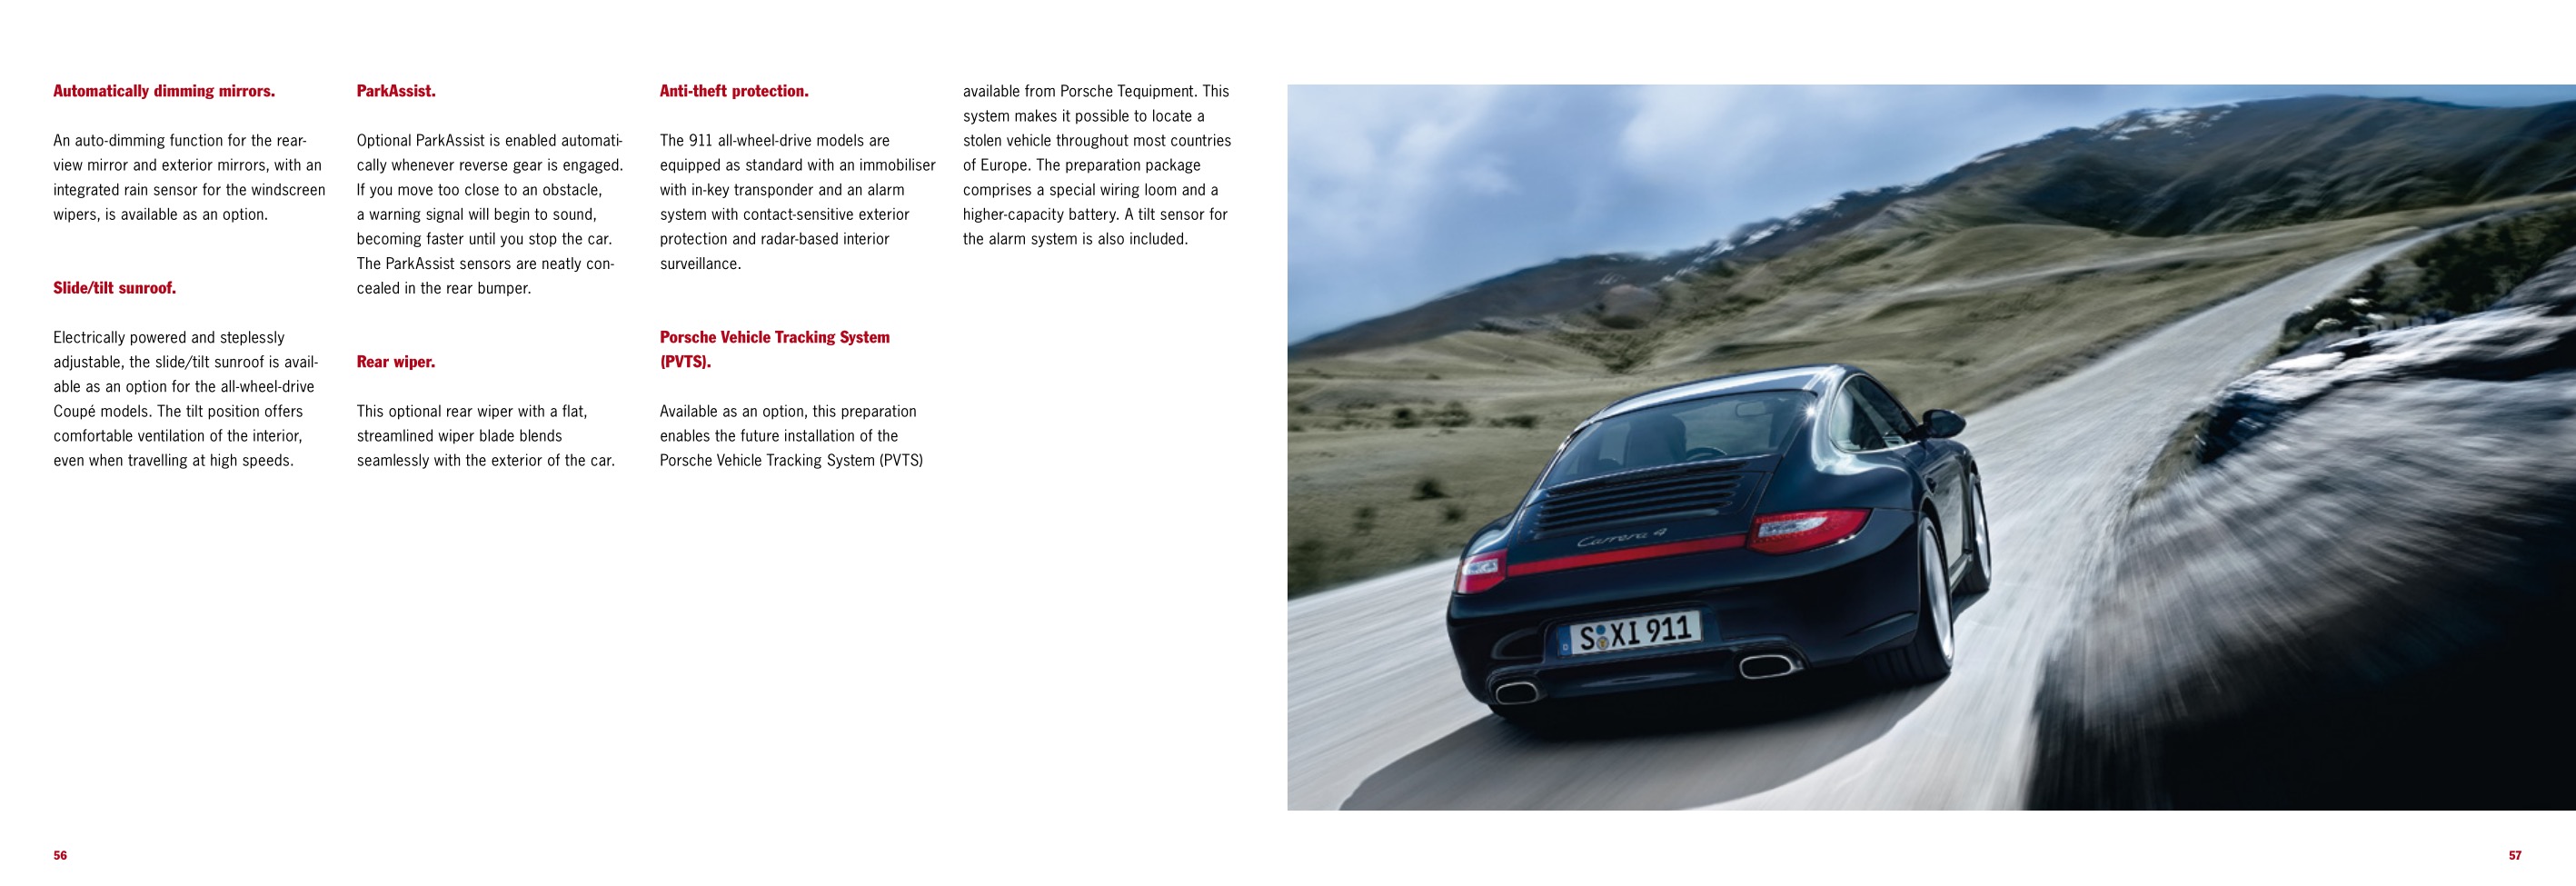 2012 Porsche 911 997 Brochure Page 23